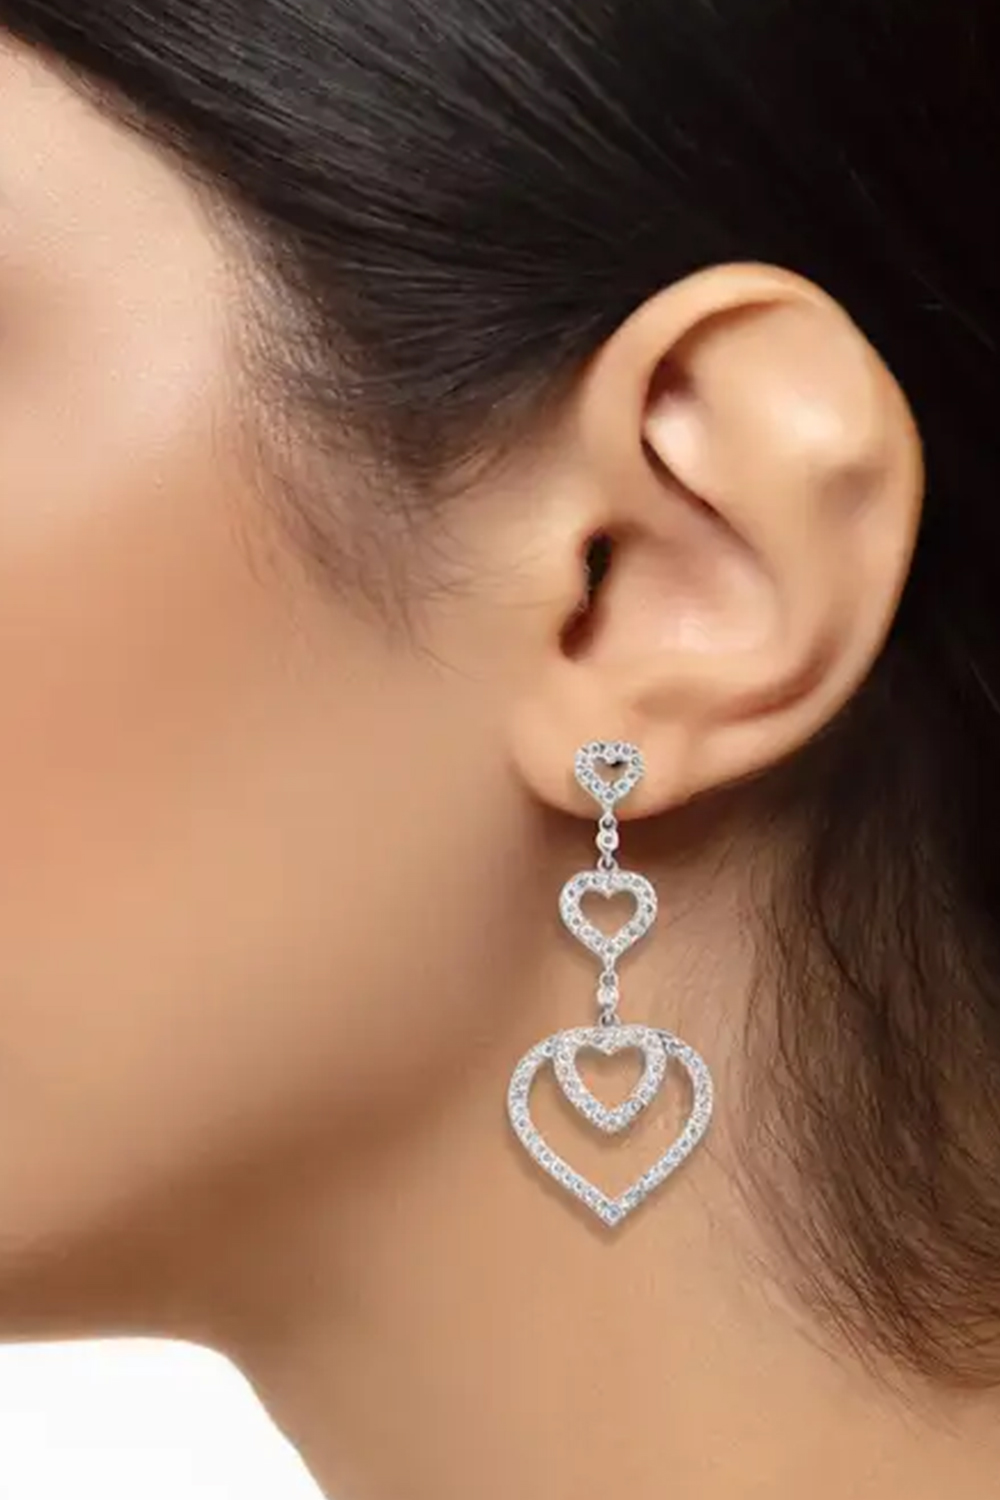 18k gold 1.54cts Diamond Earring